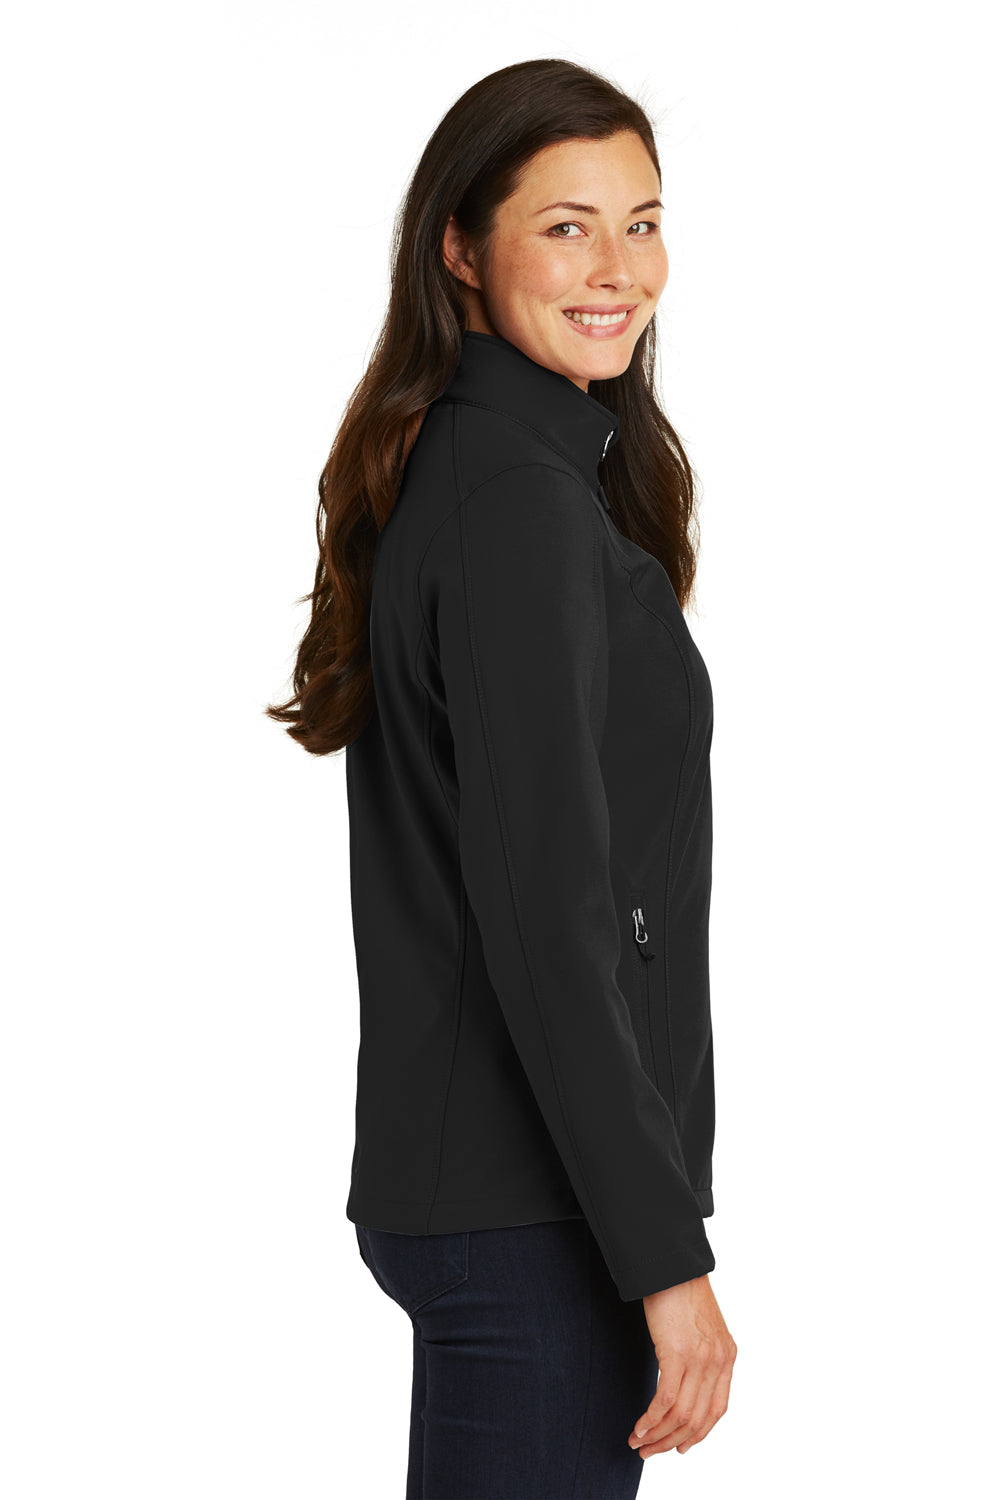 Port Authority L317 Womens Core Wind & Water Resistant Full Zip Jacket Black Side